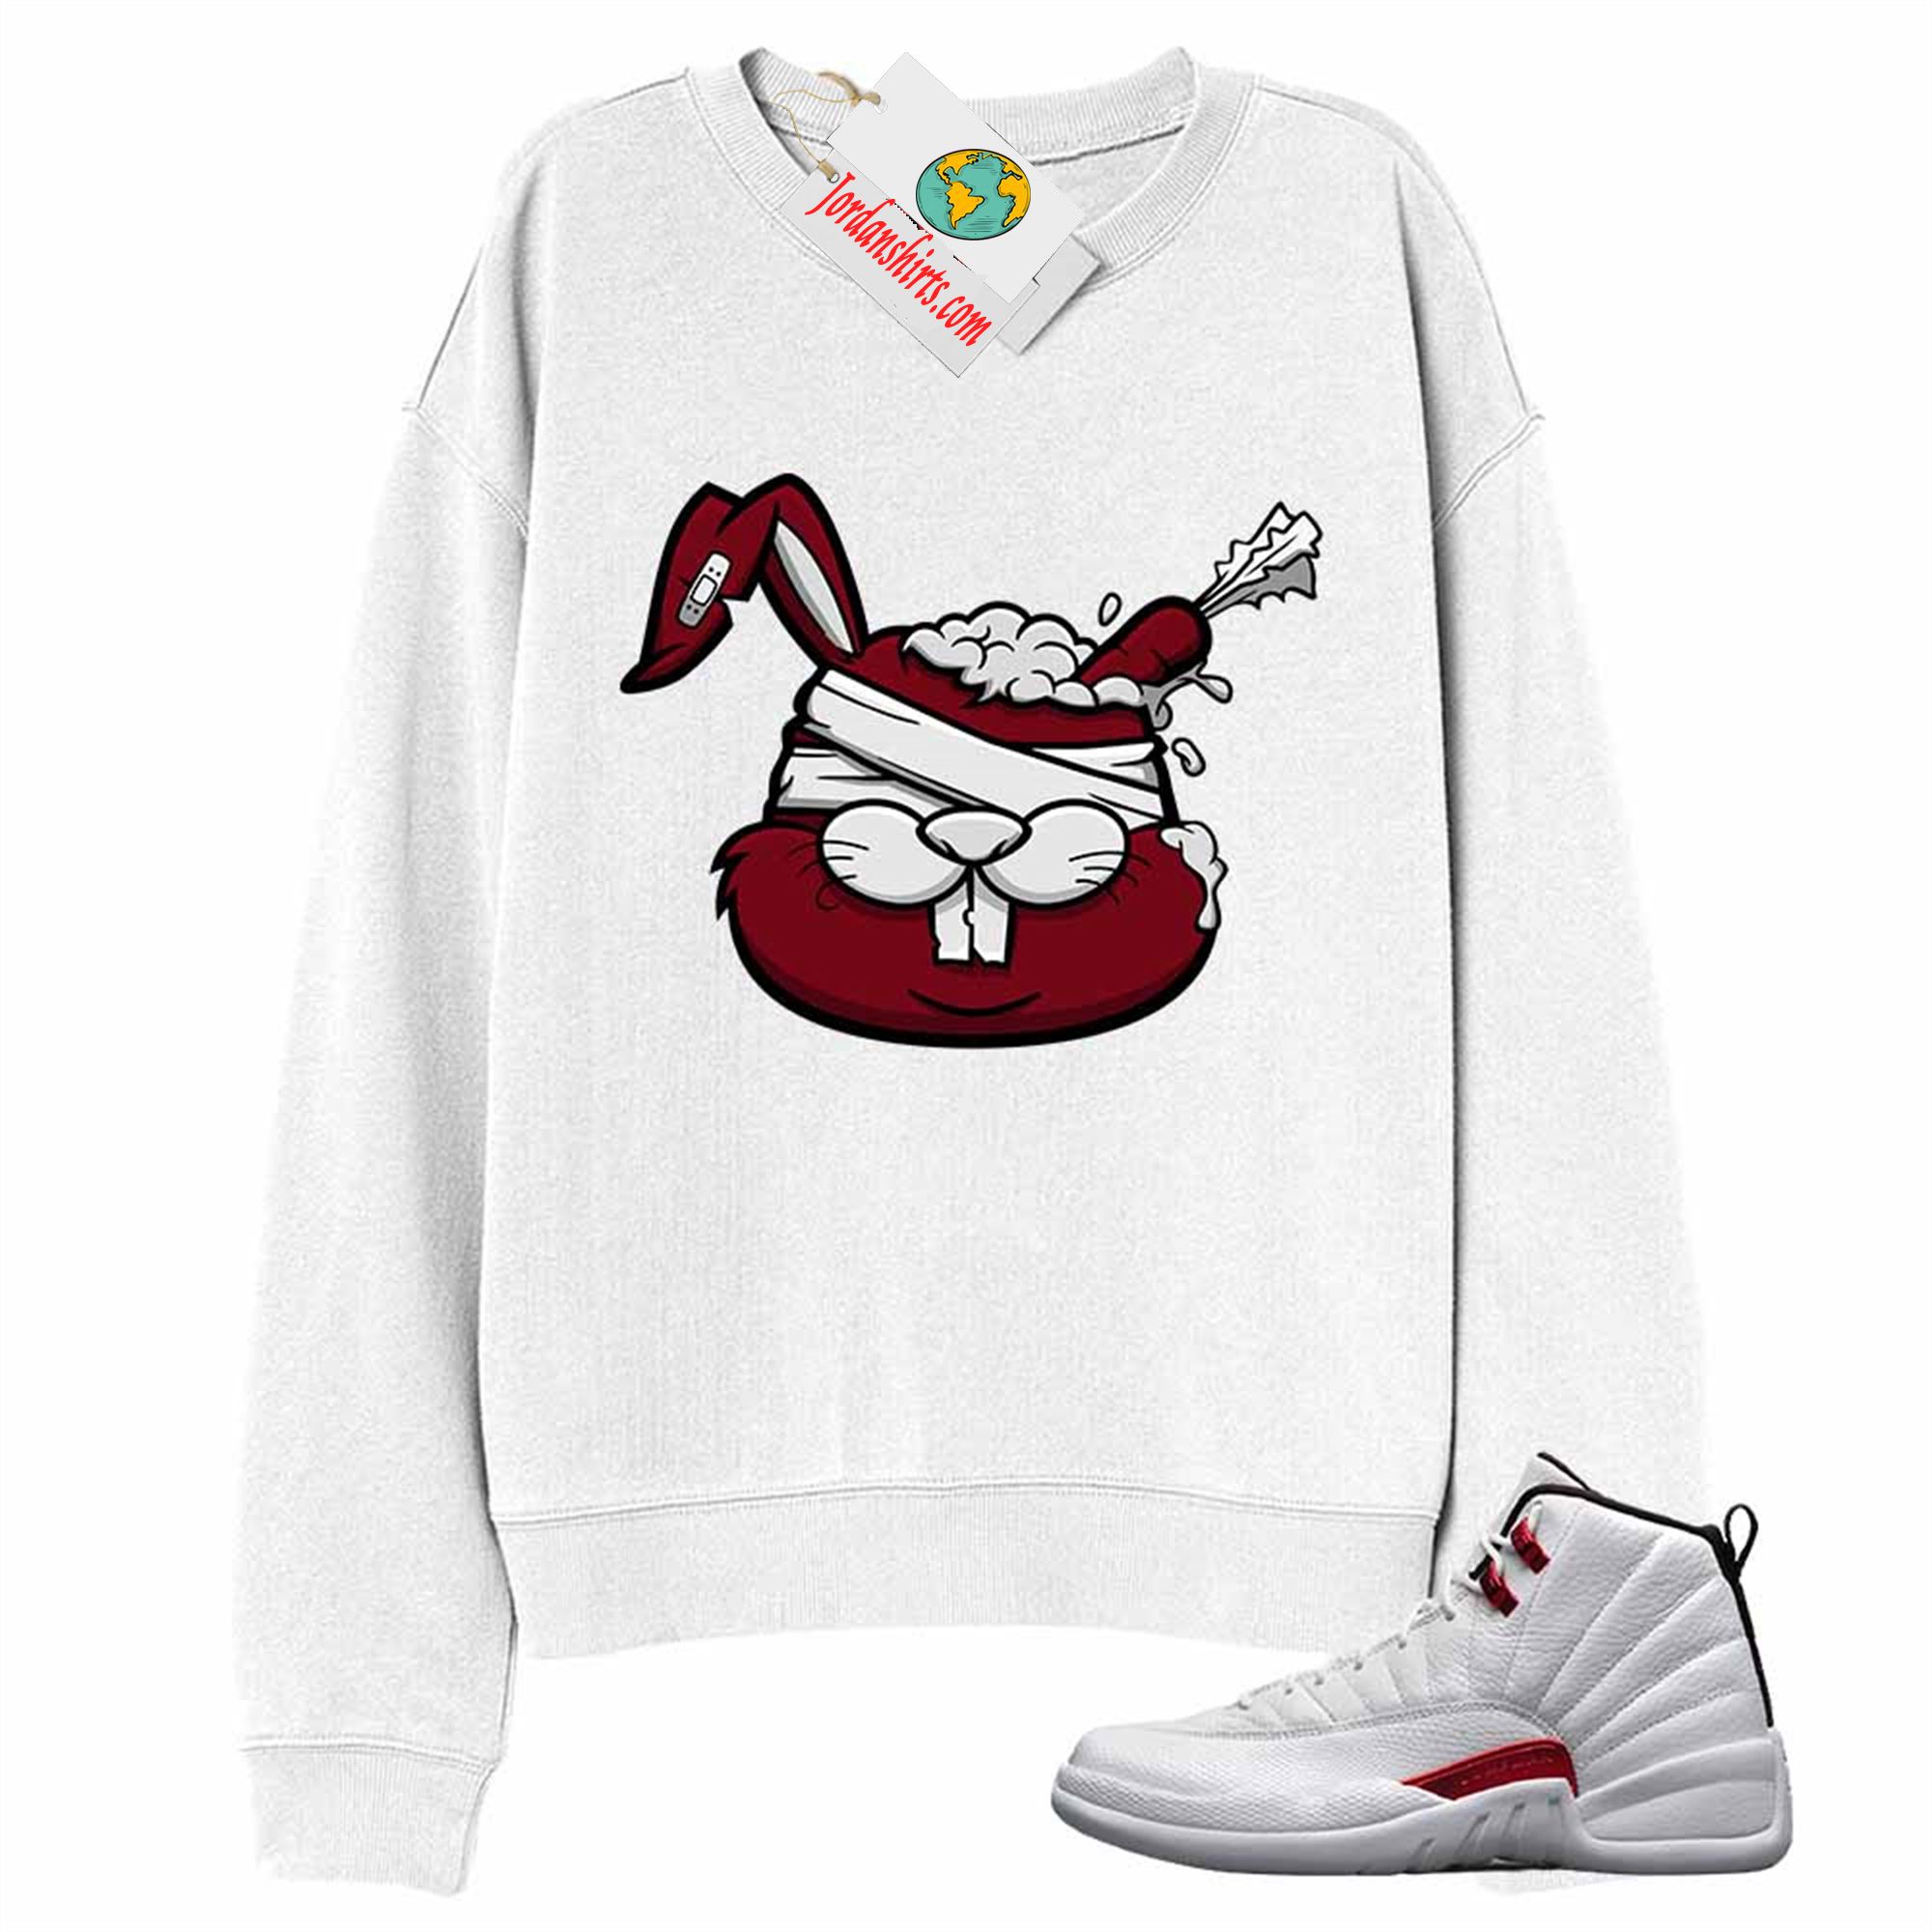 Jordan 12 Sweatshirt, Zombie Bunny White Sweatshirt Air Jordan 12 Twist 12s Size Up To 5xl